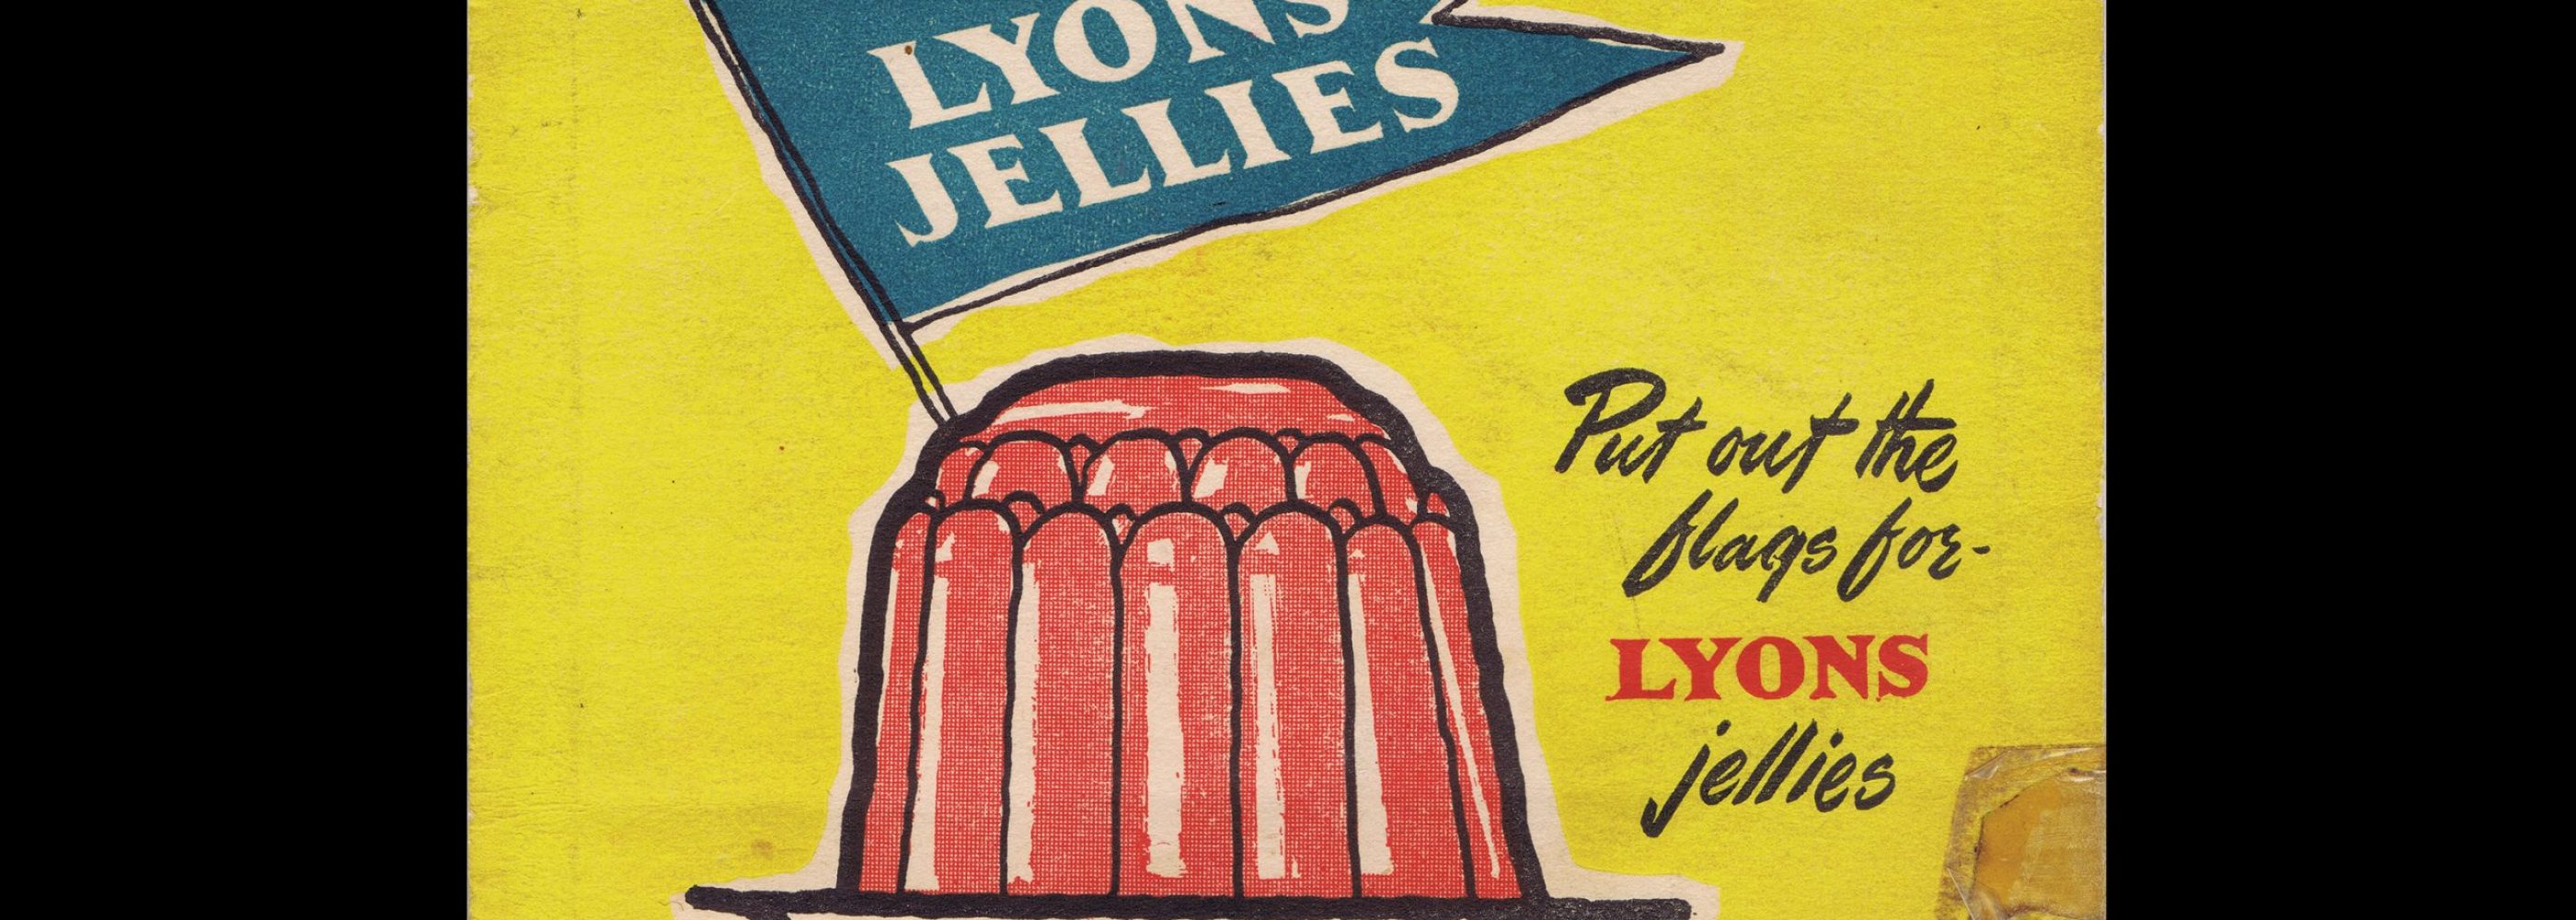 Lyons Jellies, Ephemera, 1940s